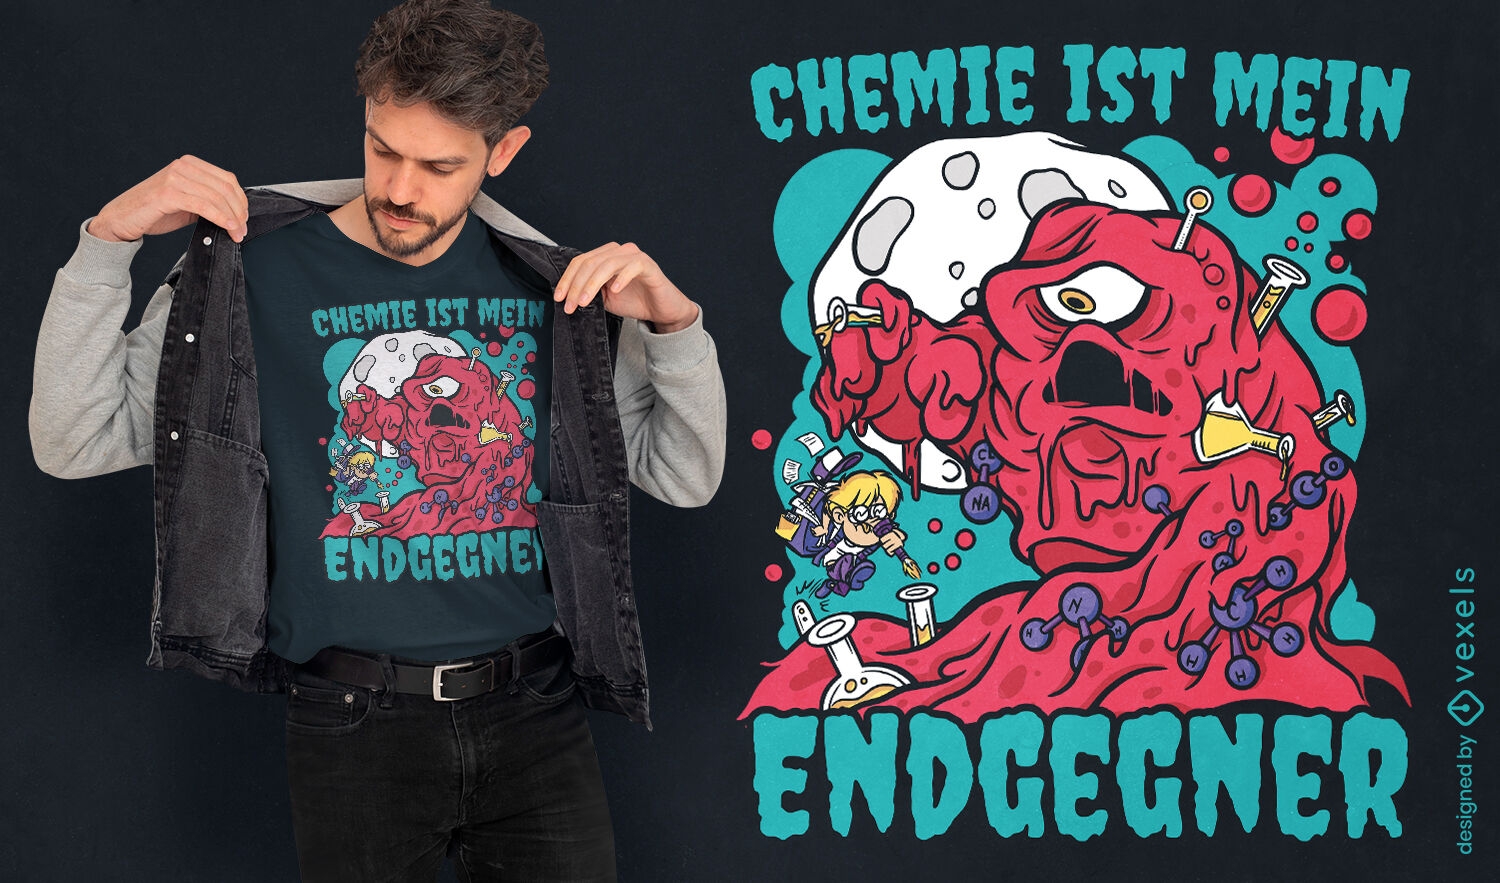 Chemistry monster and student t-shirt design